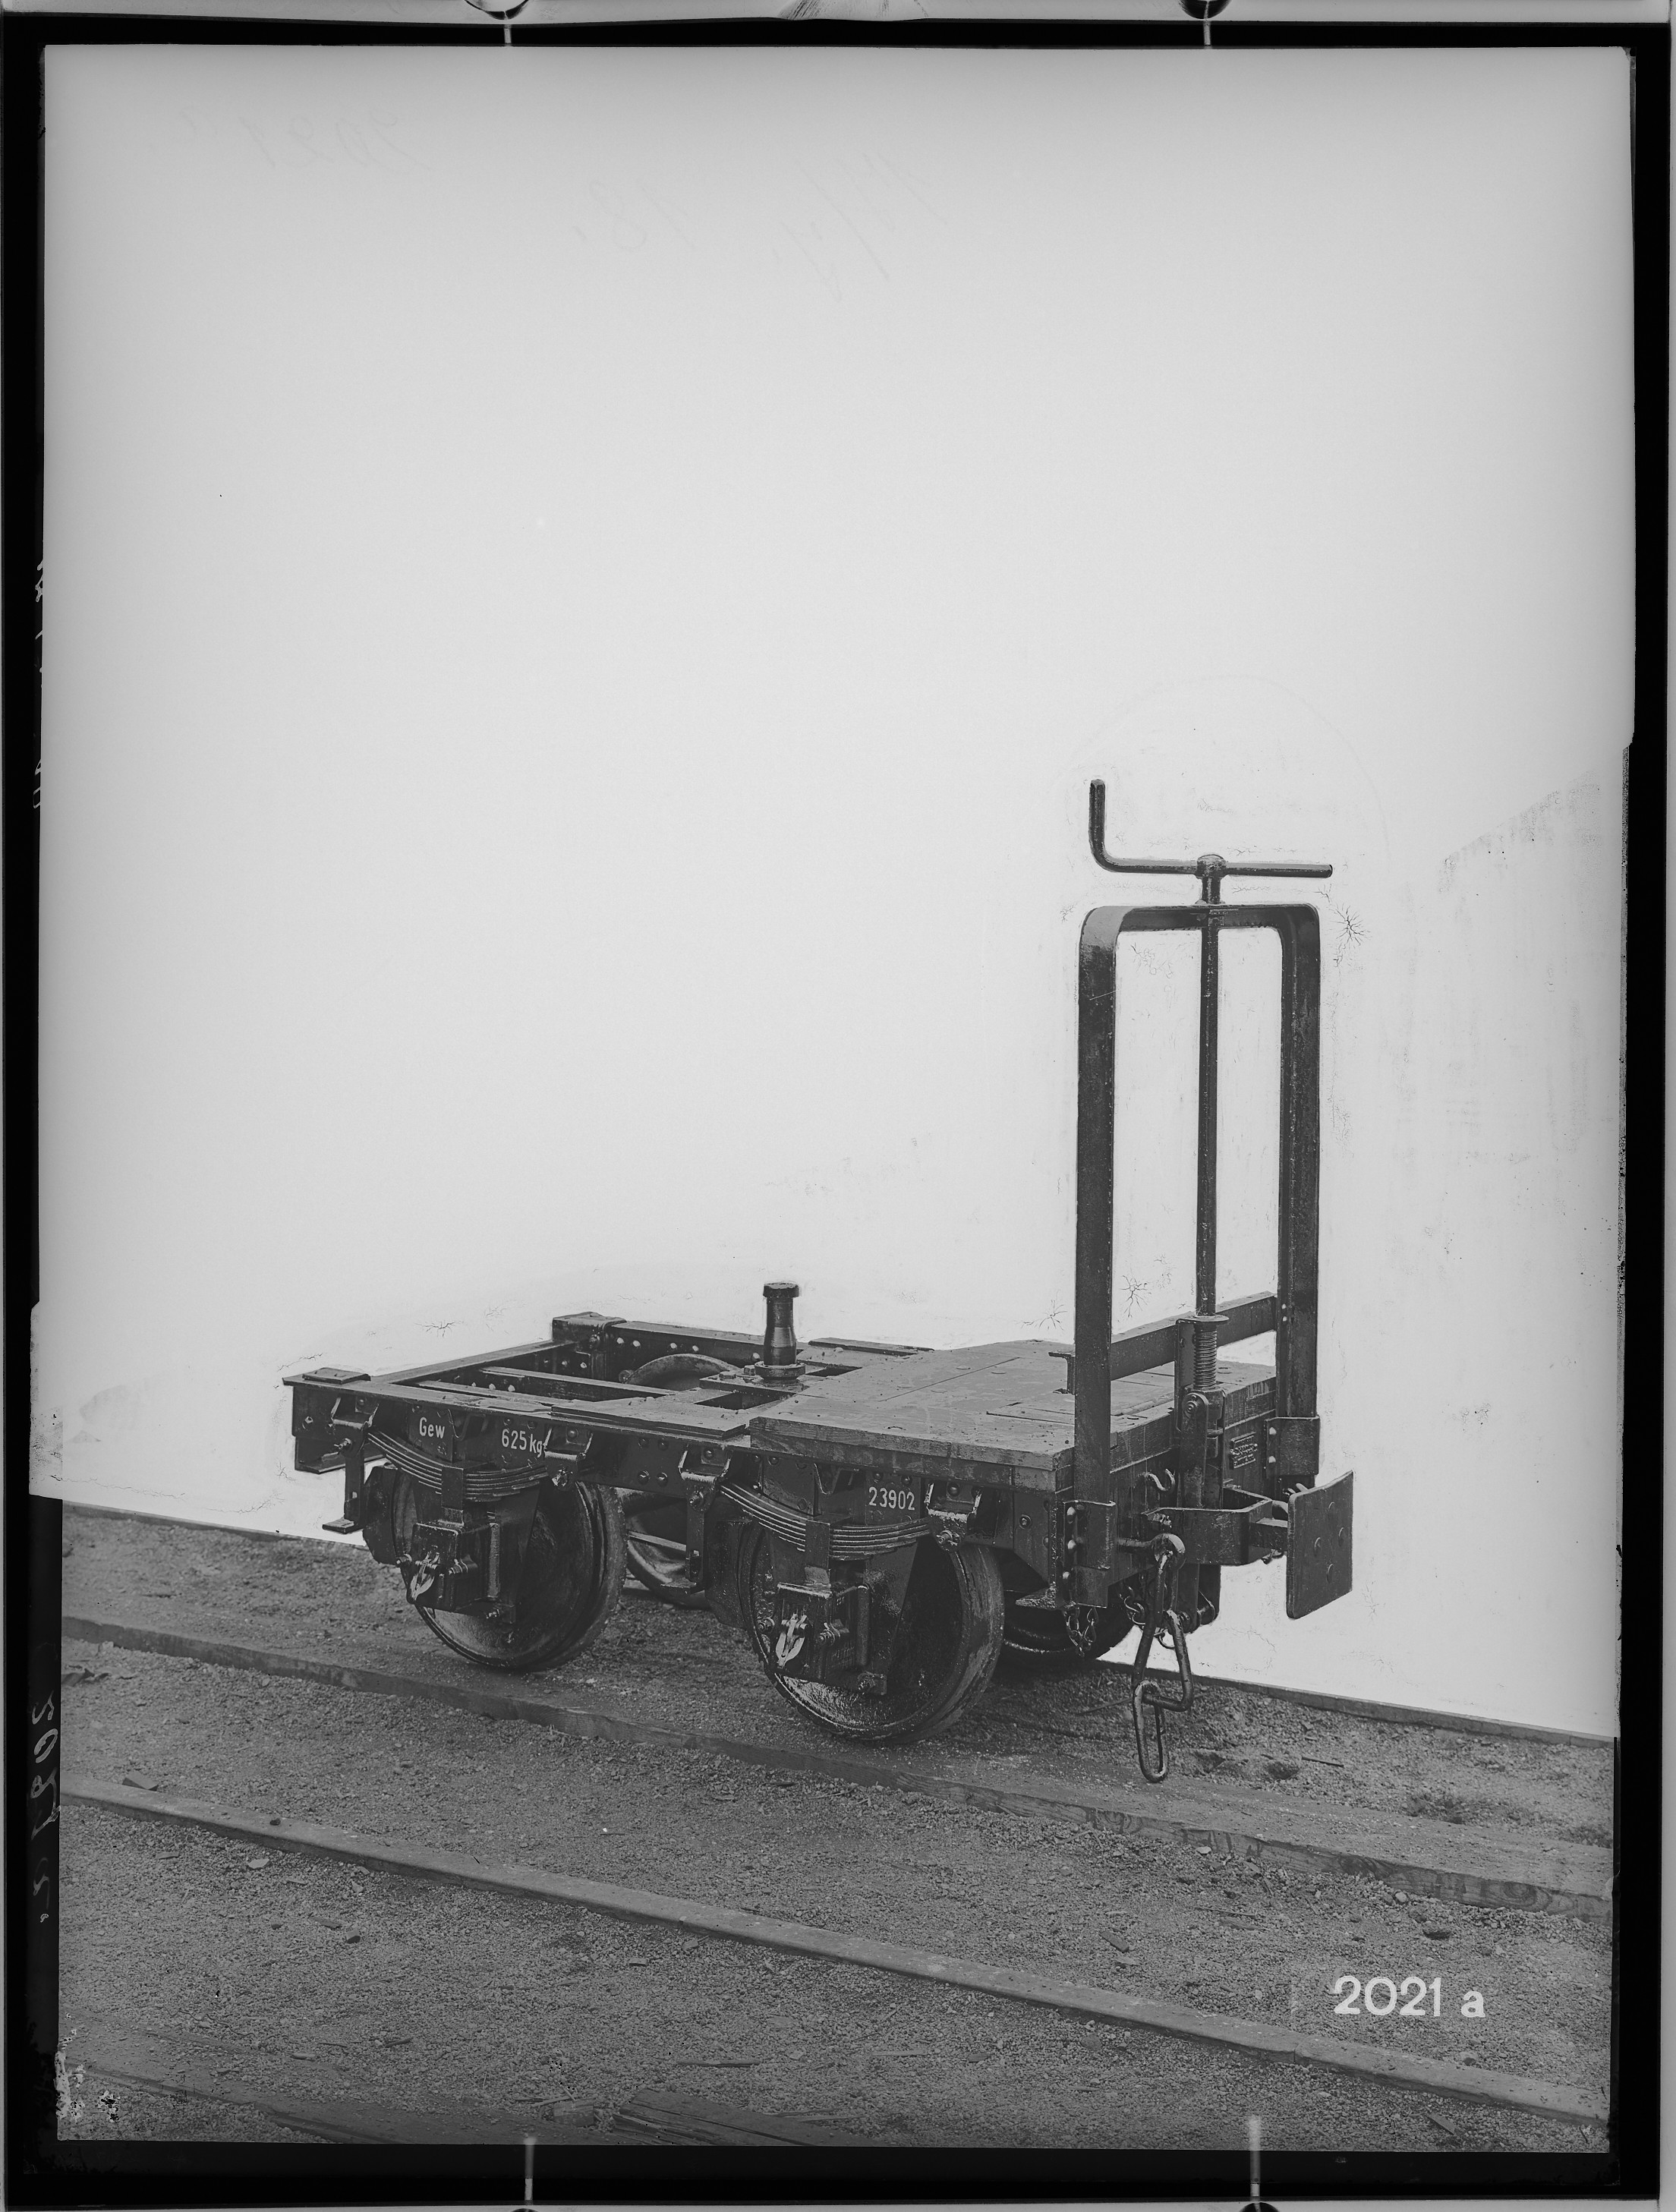 Fotografie: vierachsiger Feldbahnwagen neuer Bauart (Drehgestell), 1918 (Schenkung der Bombardier Transportation, Werk Görlitz | Eigentum/Sammlung der Verkehrsmuseums Dresden gGmbH CC BY-NC-SA)